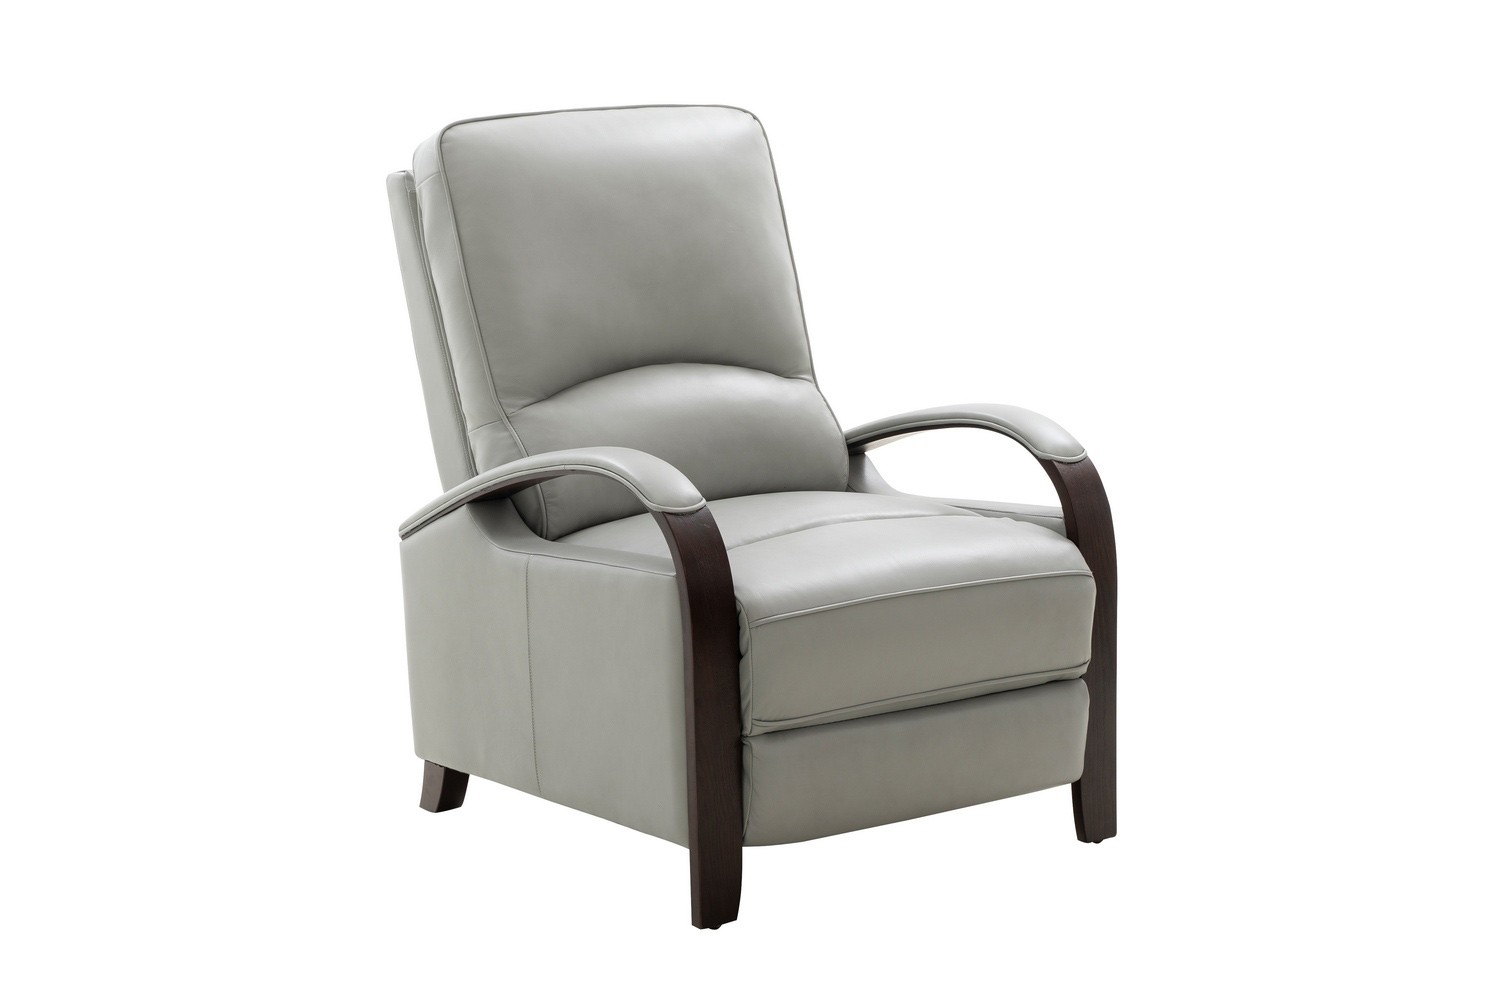 Barcalounger Bridgemore Recliner Chair - Corbett Chromium/All Leather